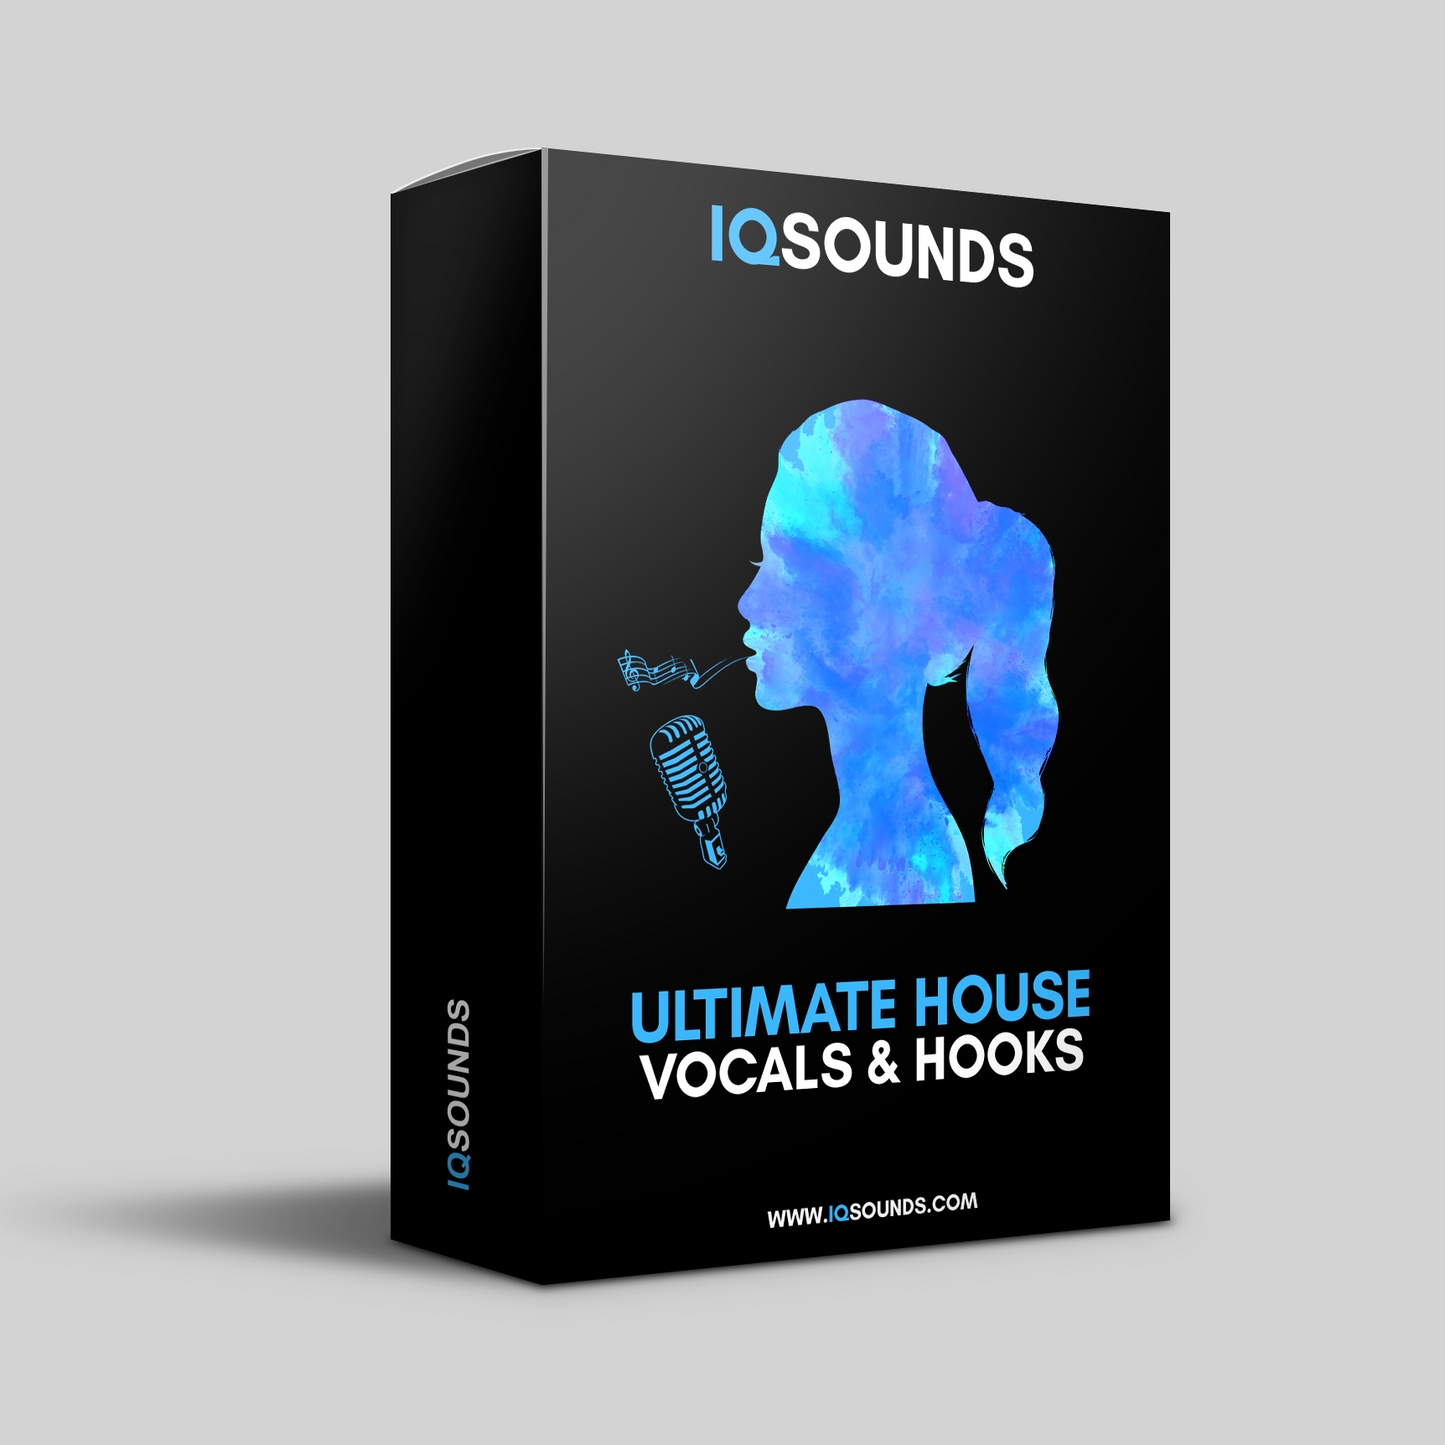 ultimate house vocals & hooks, IQSounds, iq sounds, vocal samples, vocal hooks, vocal sample pack, tech house vocals, minimal vocals, female vocals, female vocal samples